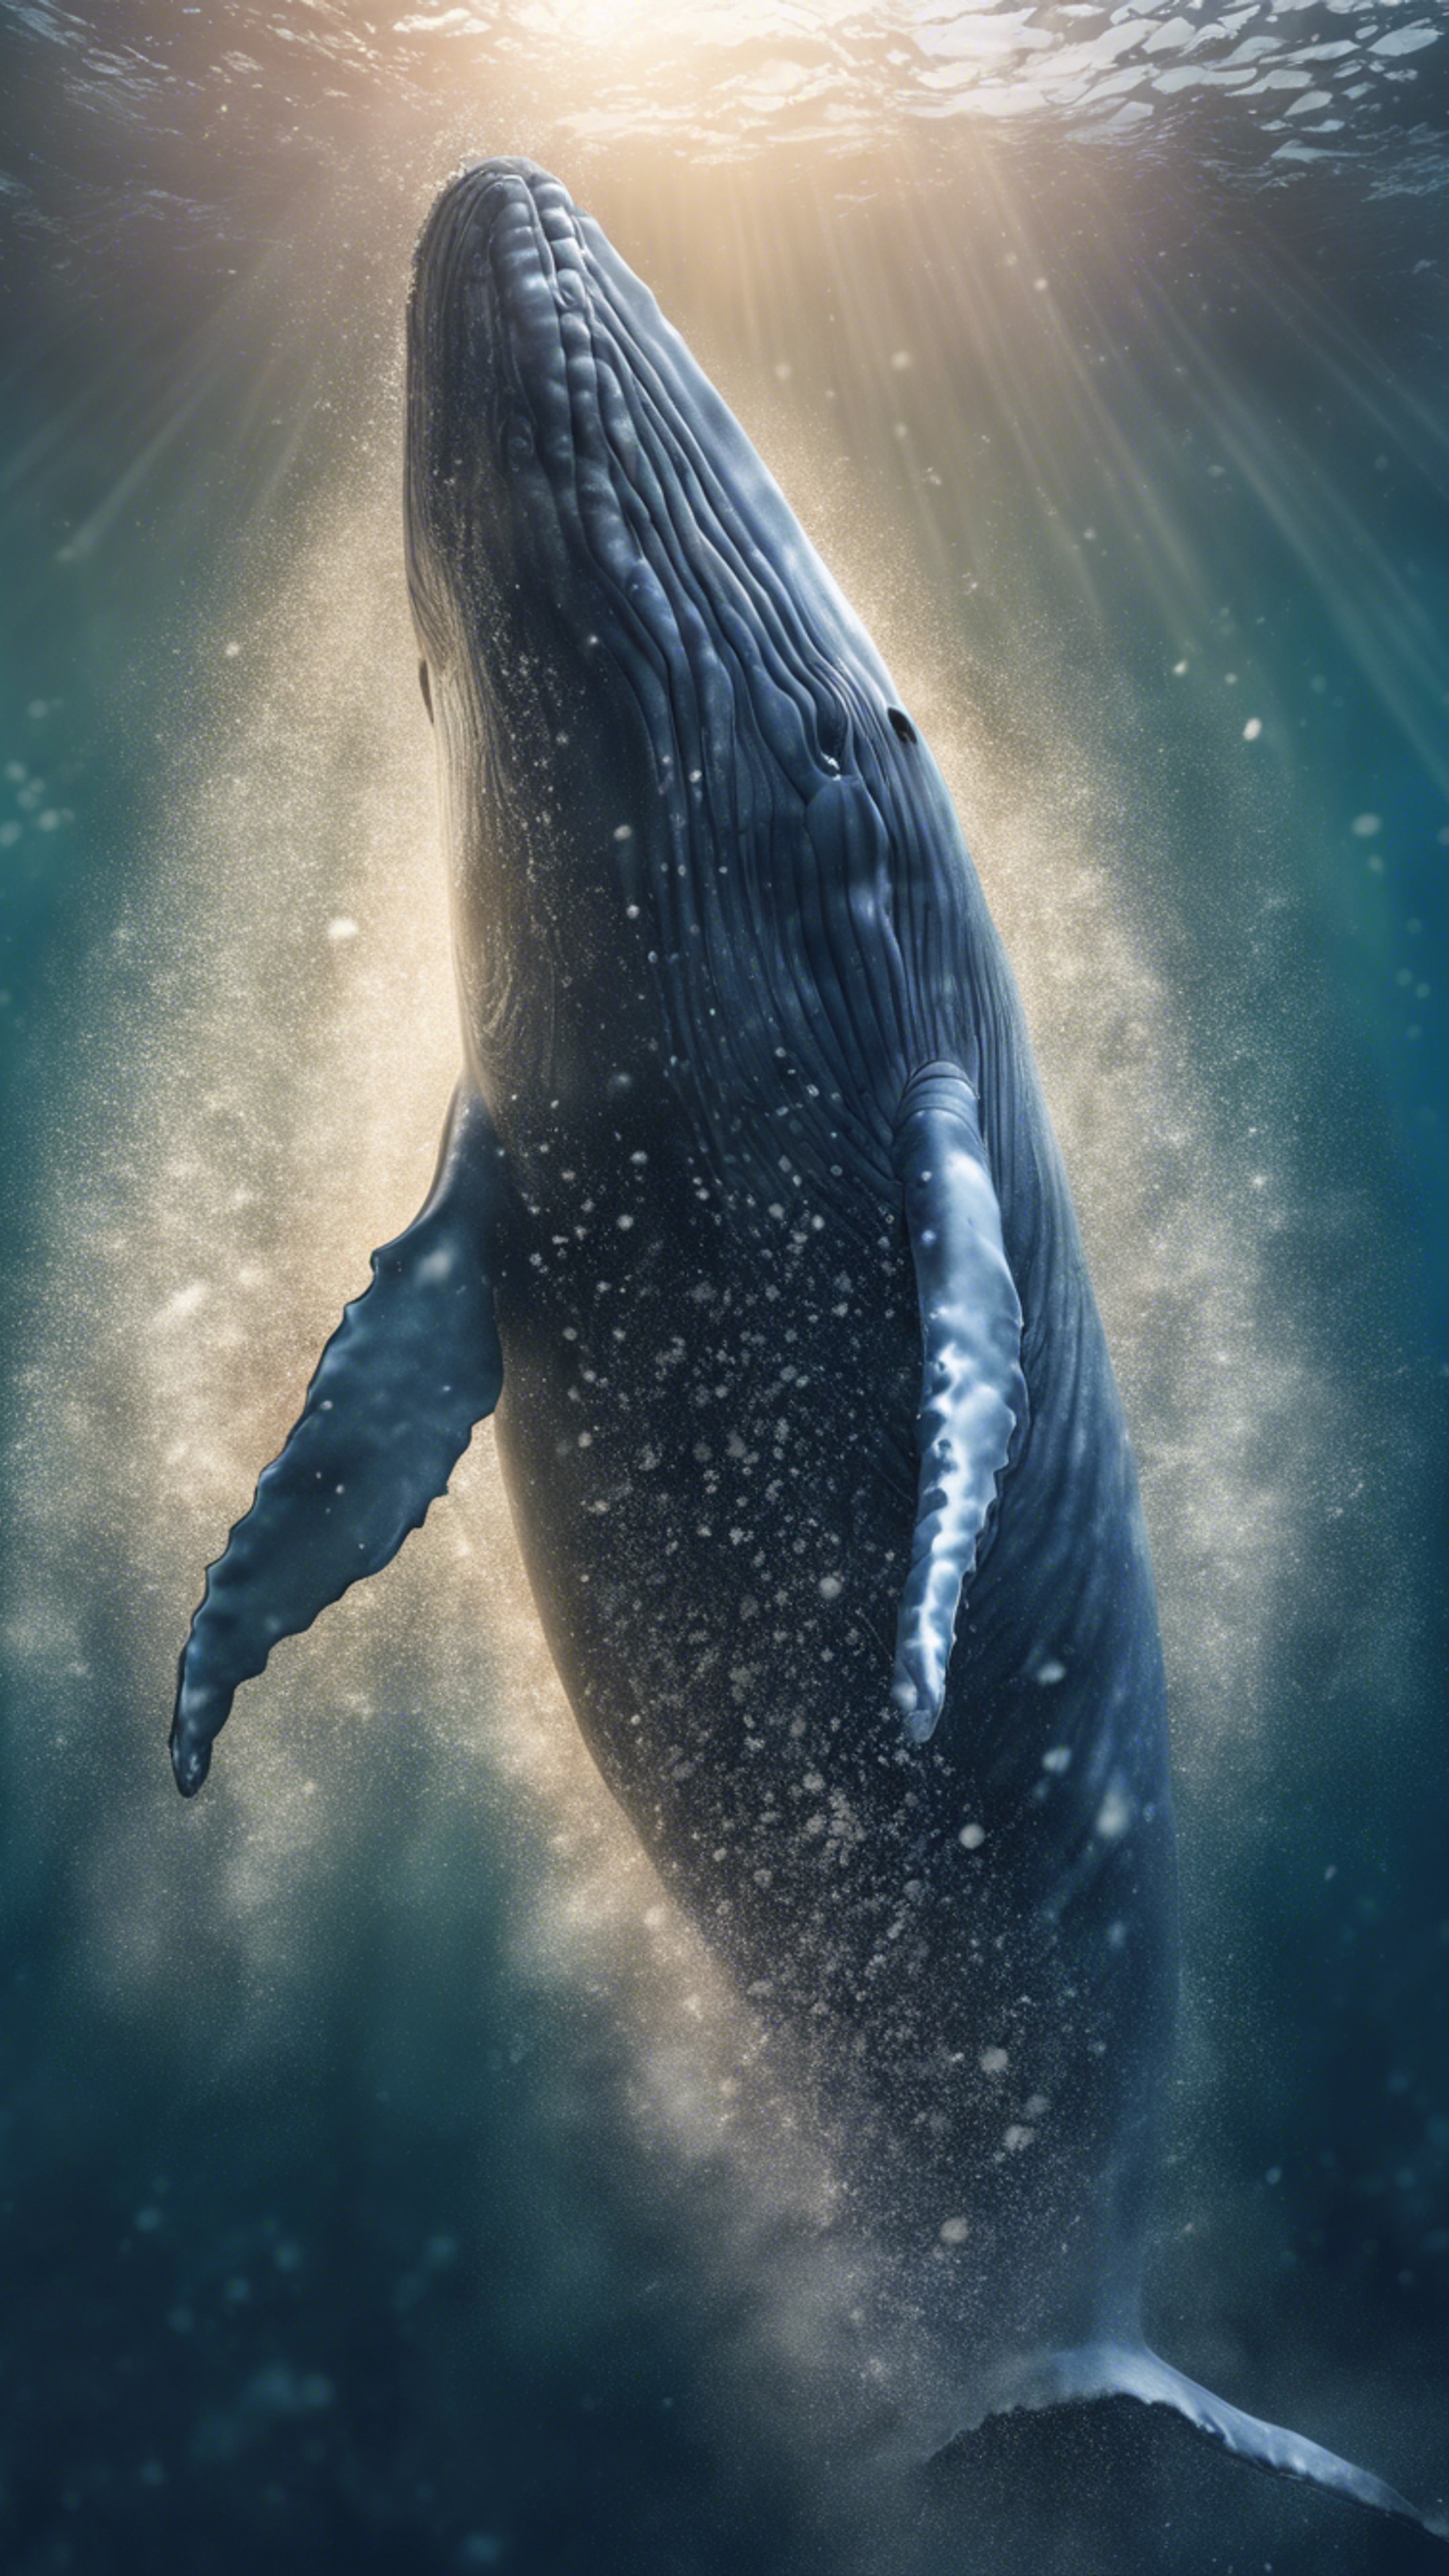 A digital portrait of a majestic sperm whale deep below the ocean waves. Tapeta[e5d10afbe32a416ca5b5]